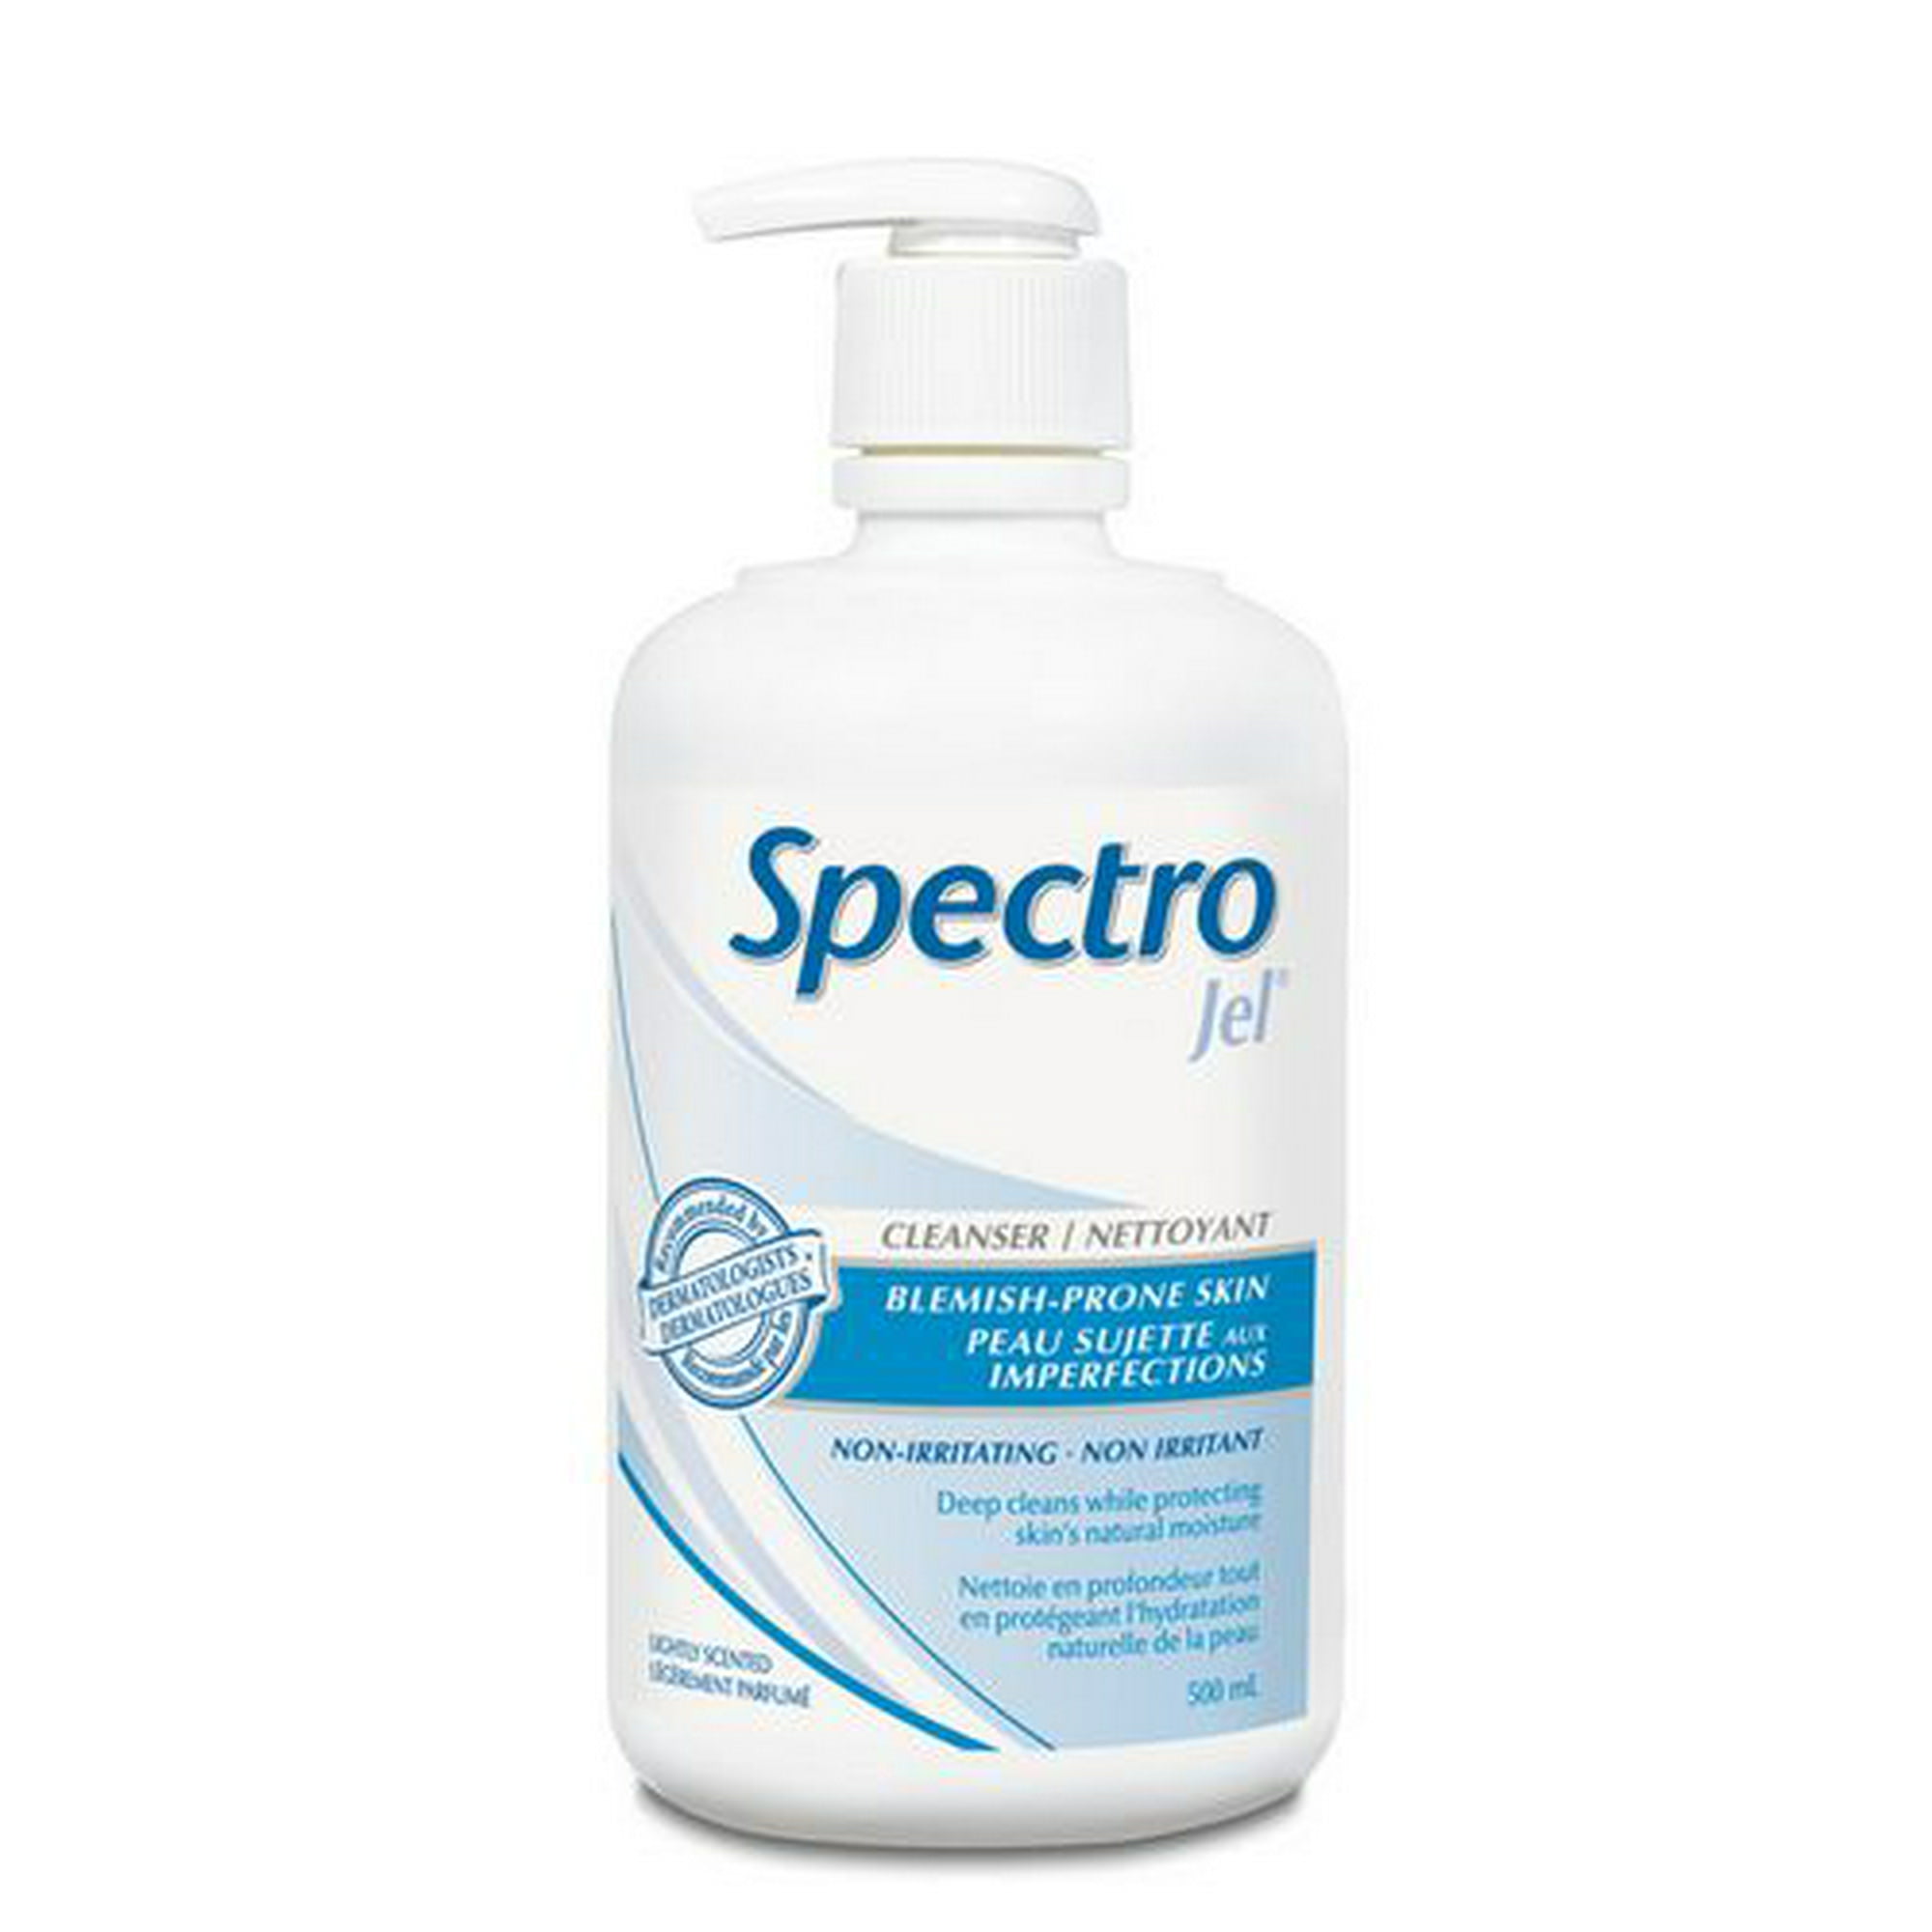 Spectro Jel Cleanser Face Wash Blemish-Prone Skin Fragrance & Dye